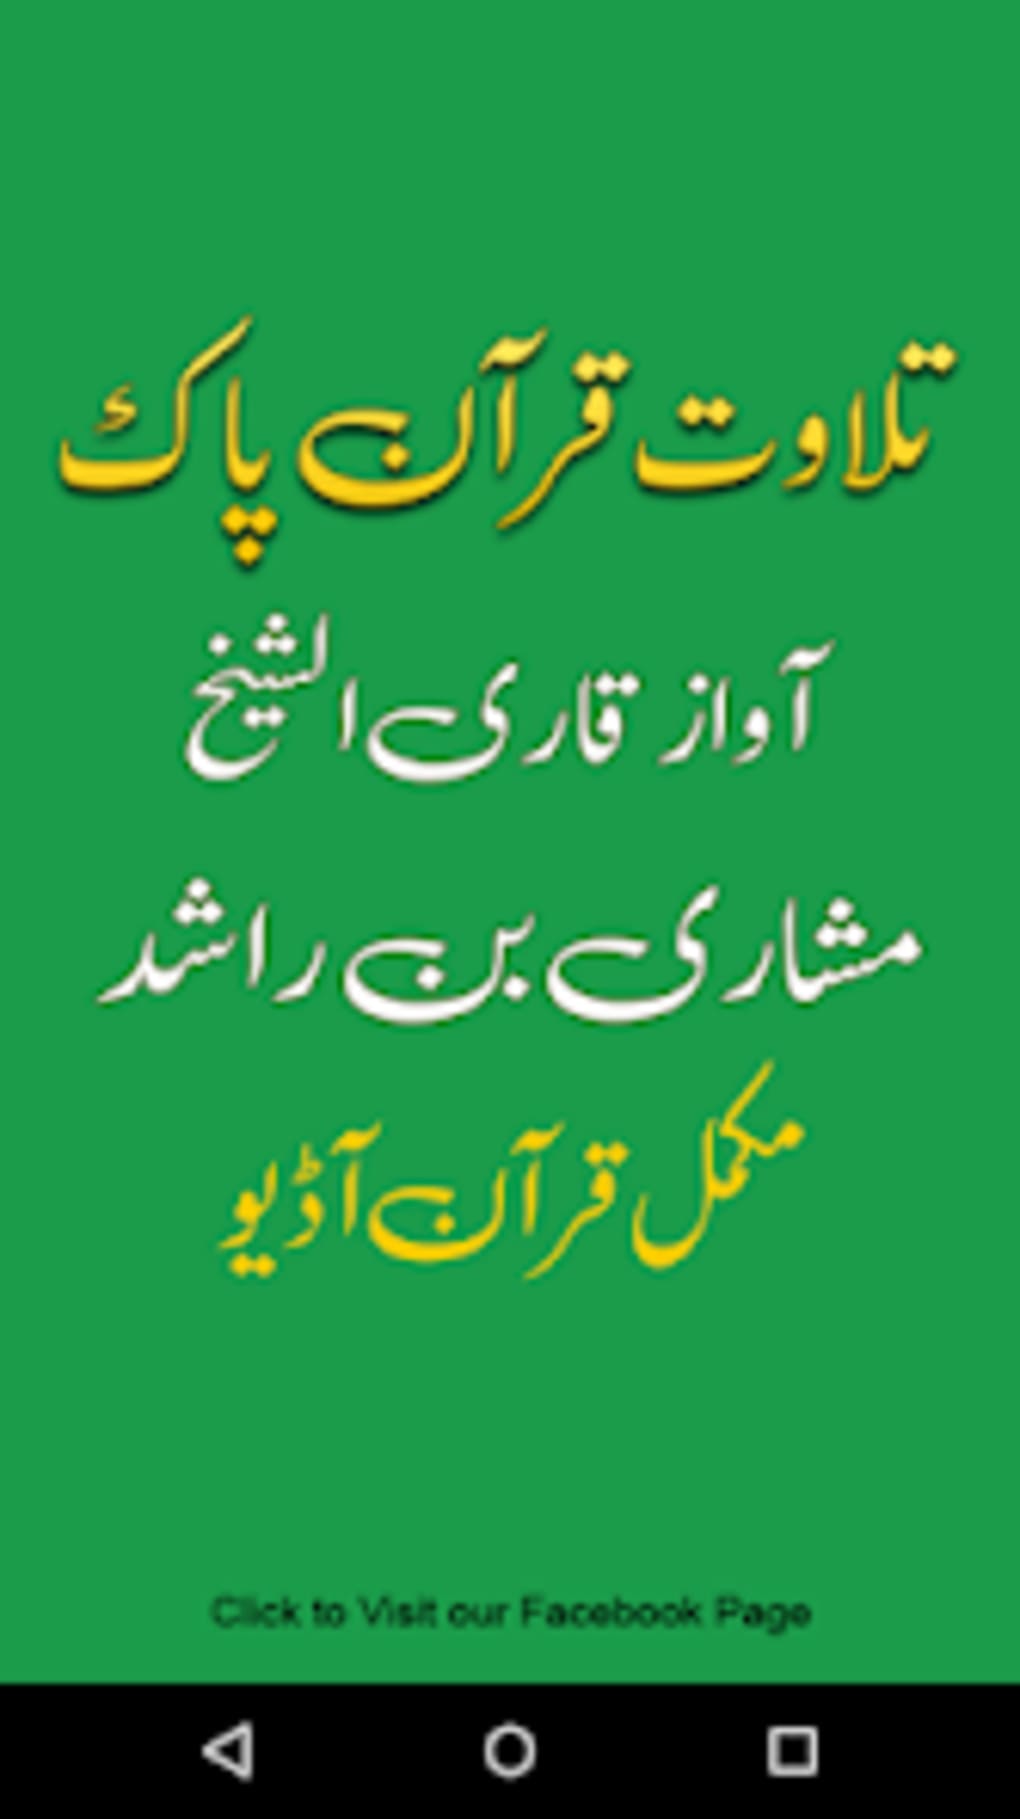 Mishary Bin Rashid Mp3 Quran for Android - Download